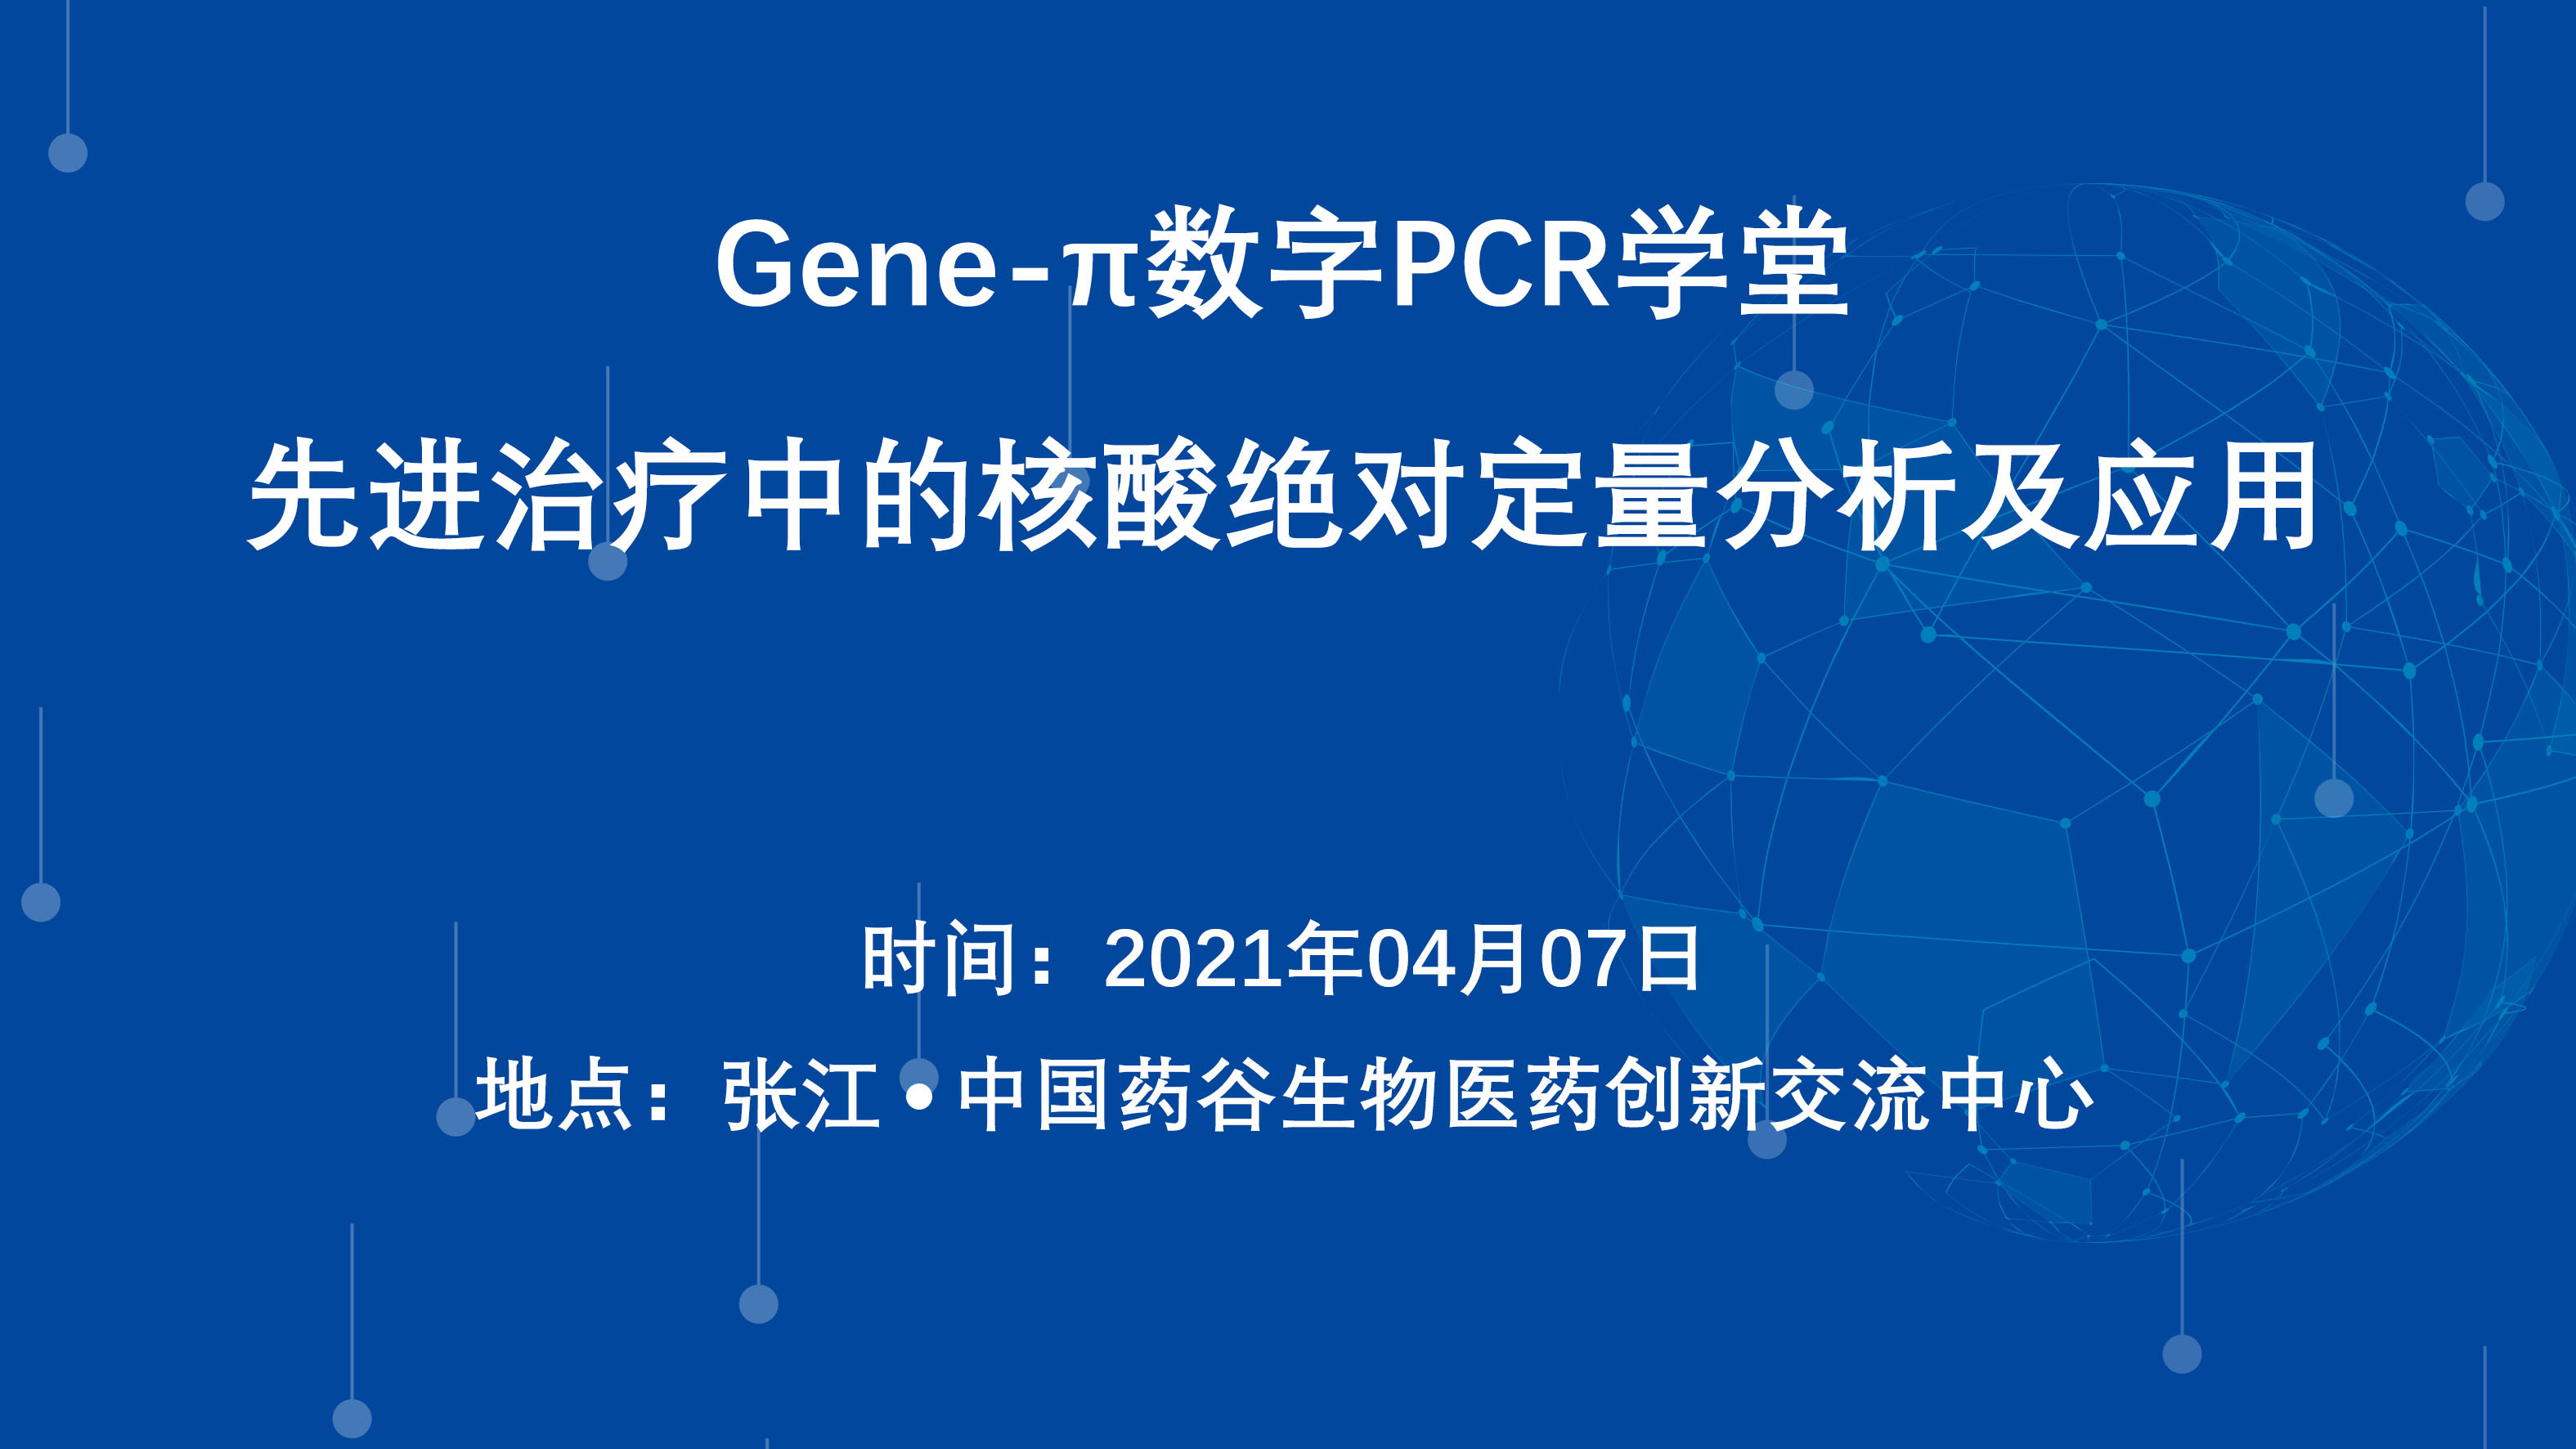 Gene-π数字PCR学堂——先进治疗中的核酸绝对定量分析及应用（上海张江站）